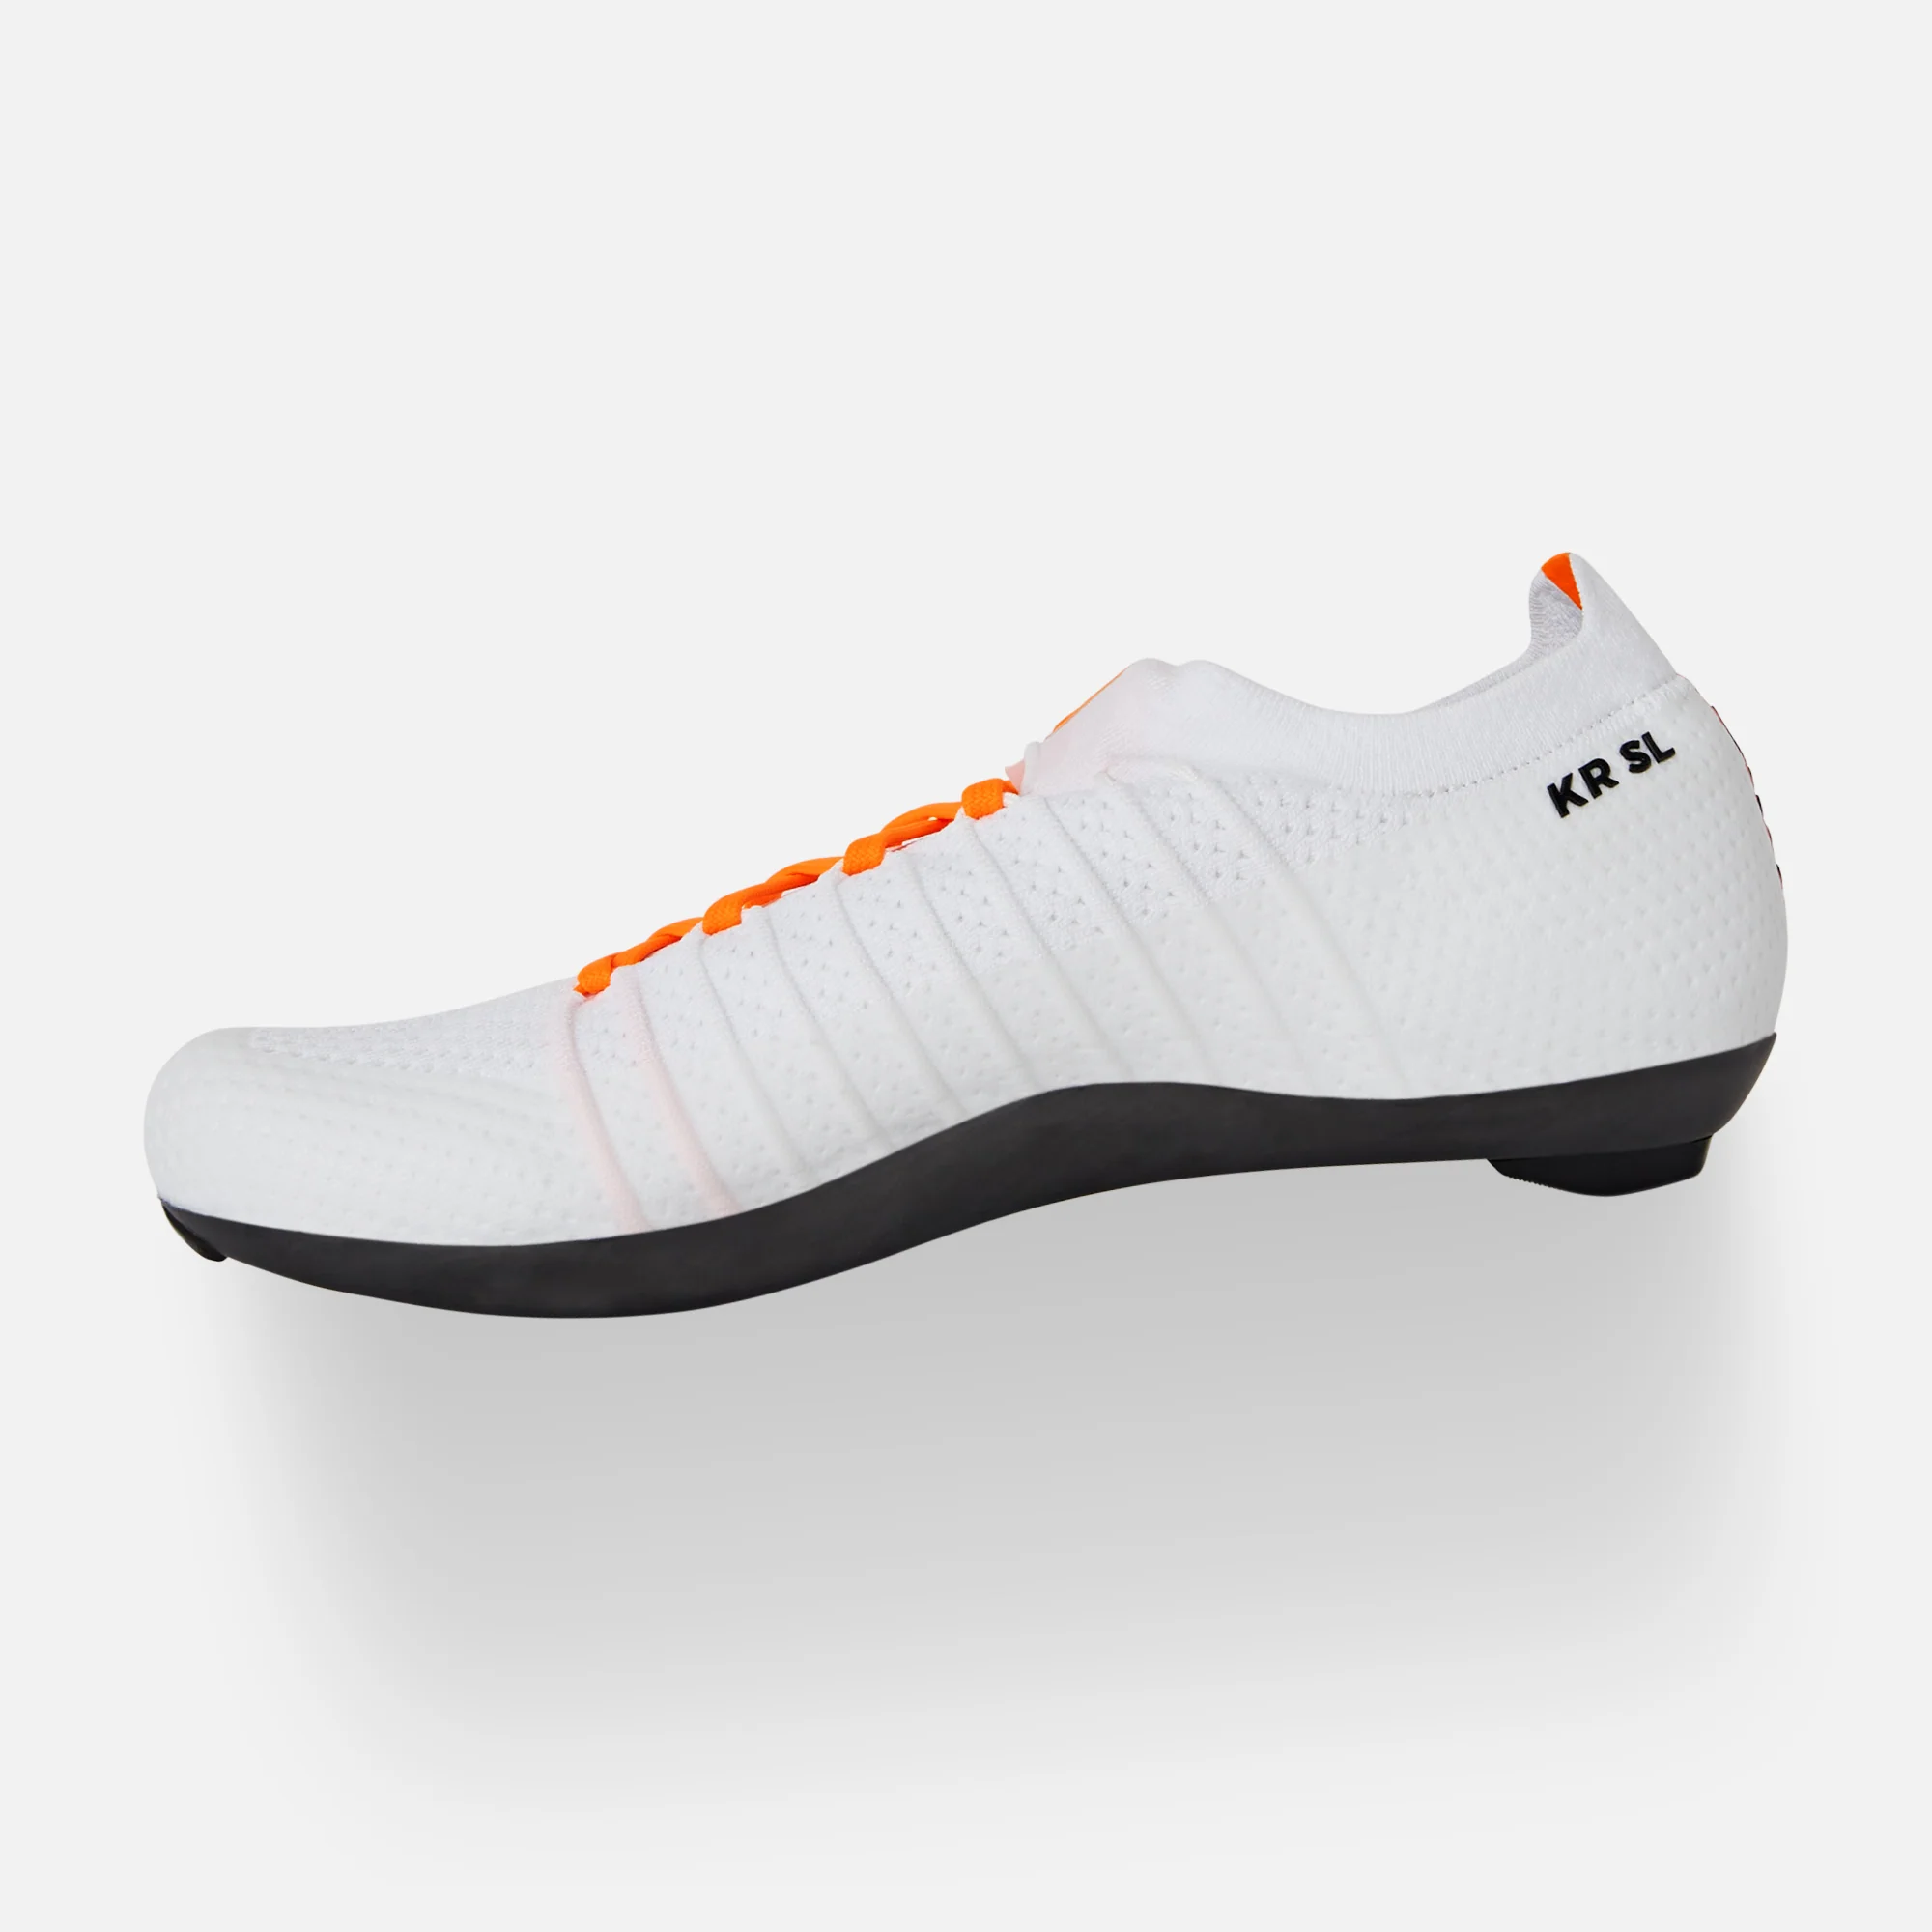 Buy Running shoes for women SL 226 - Shoes for Women | Relaxo